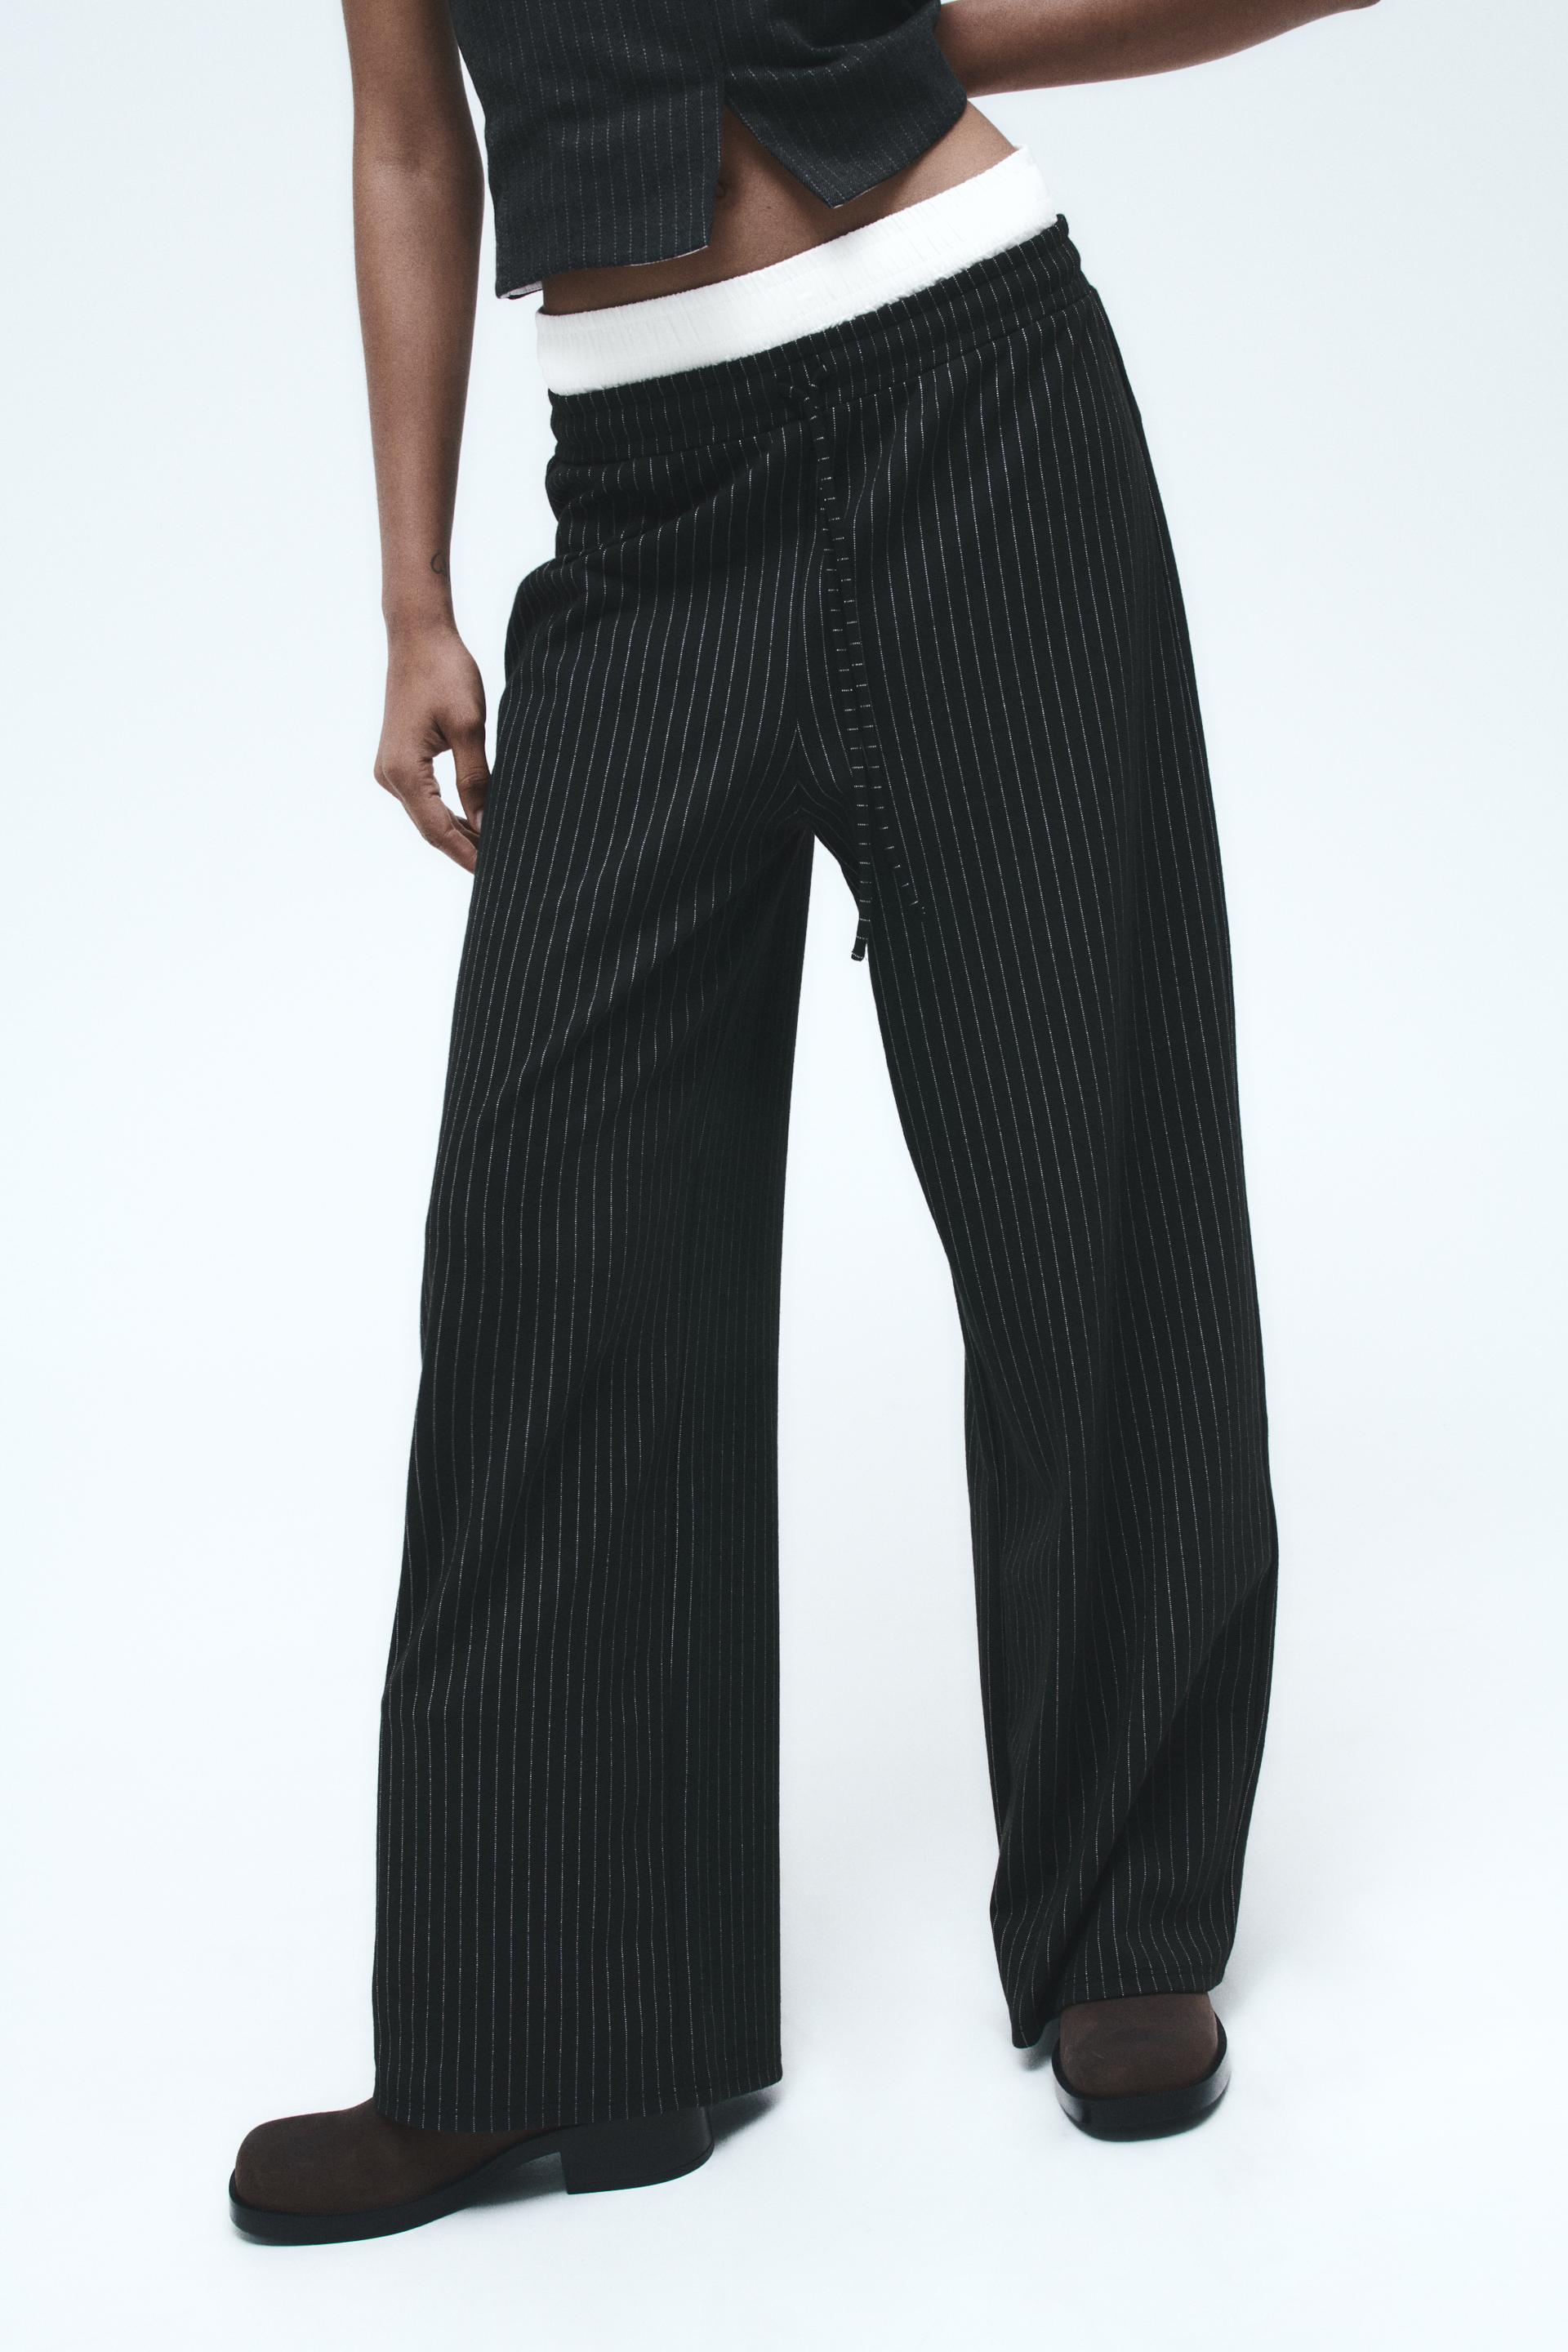 Grey Marl/Stripe/Black Boxers U5_F3493 Pepe Jeans, Underwear Grey  Marl/Stripe/Black Boxers U5_F3493 Pepe Jeans, Underwear